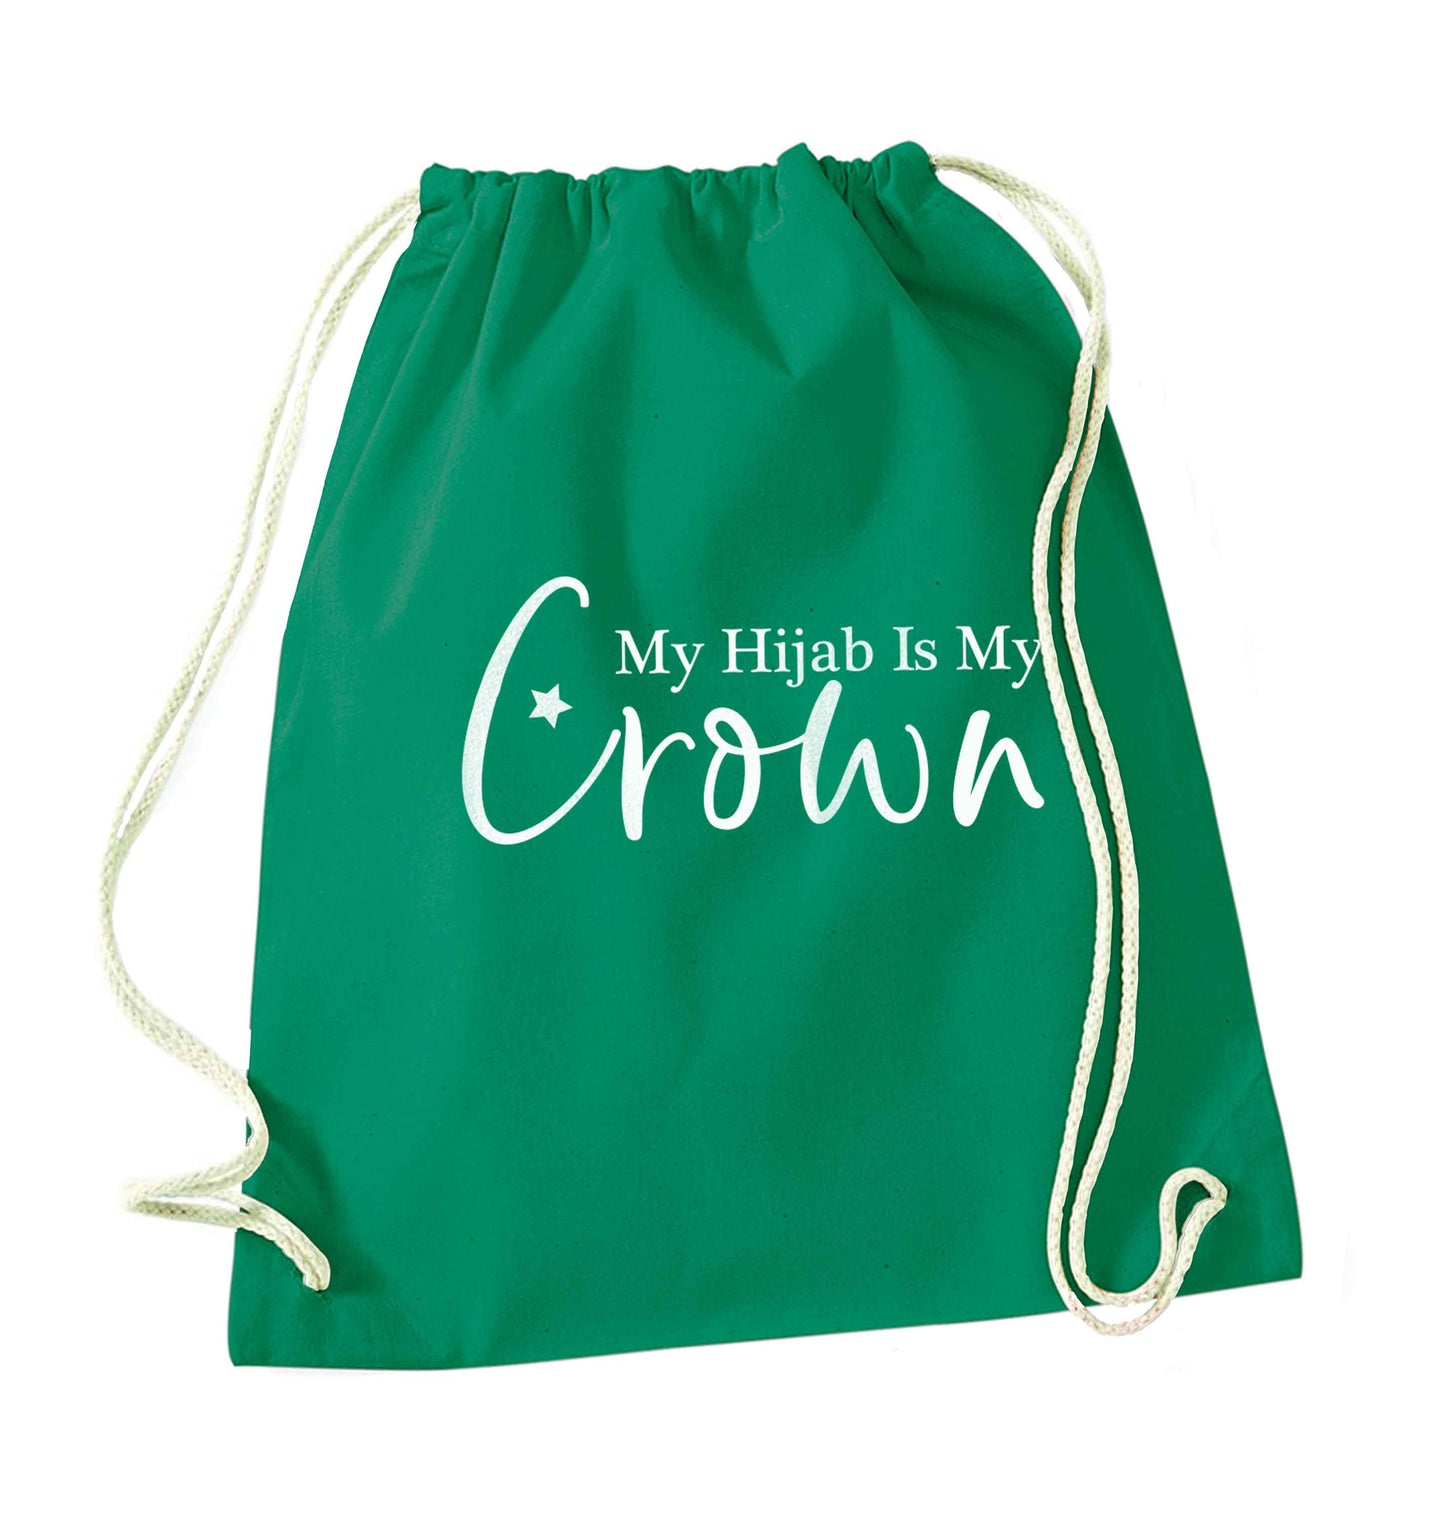 My hijab is my crown green drawstring bag